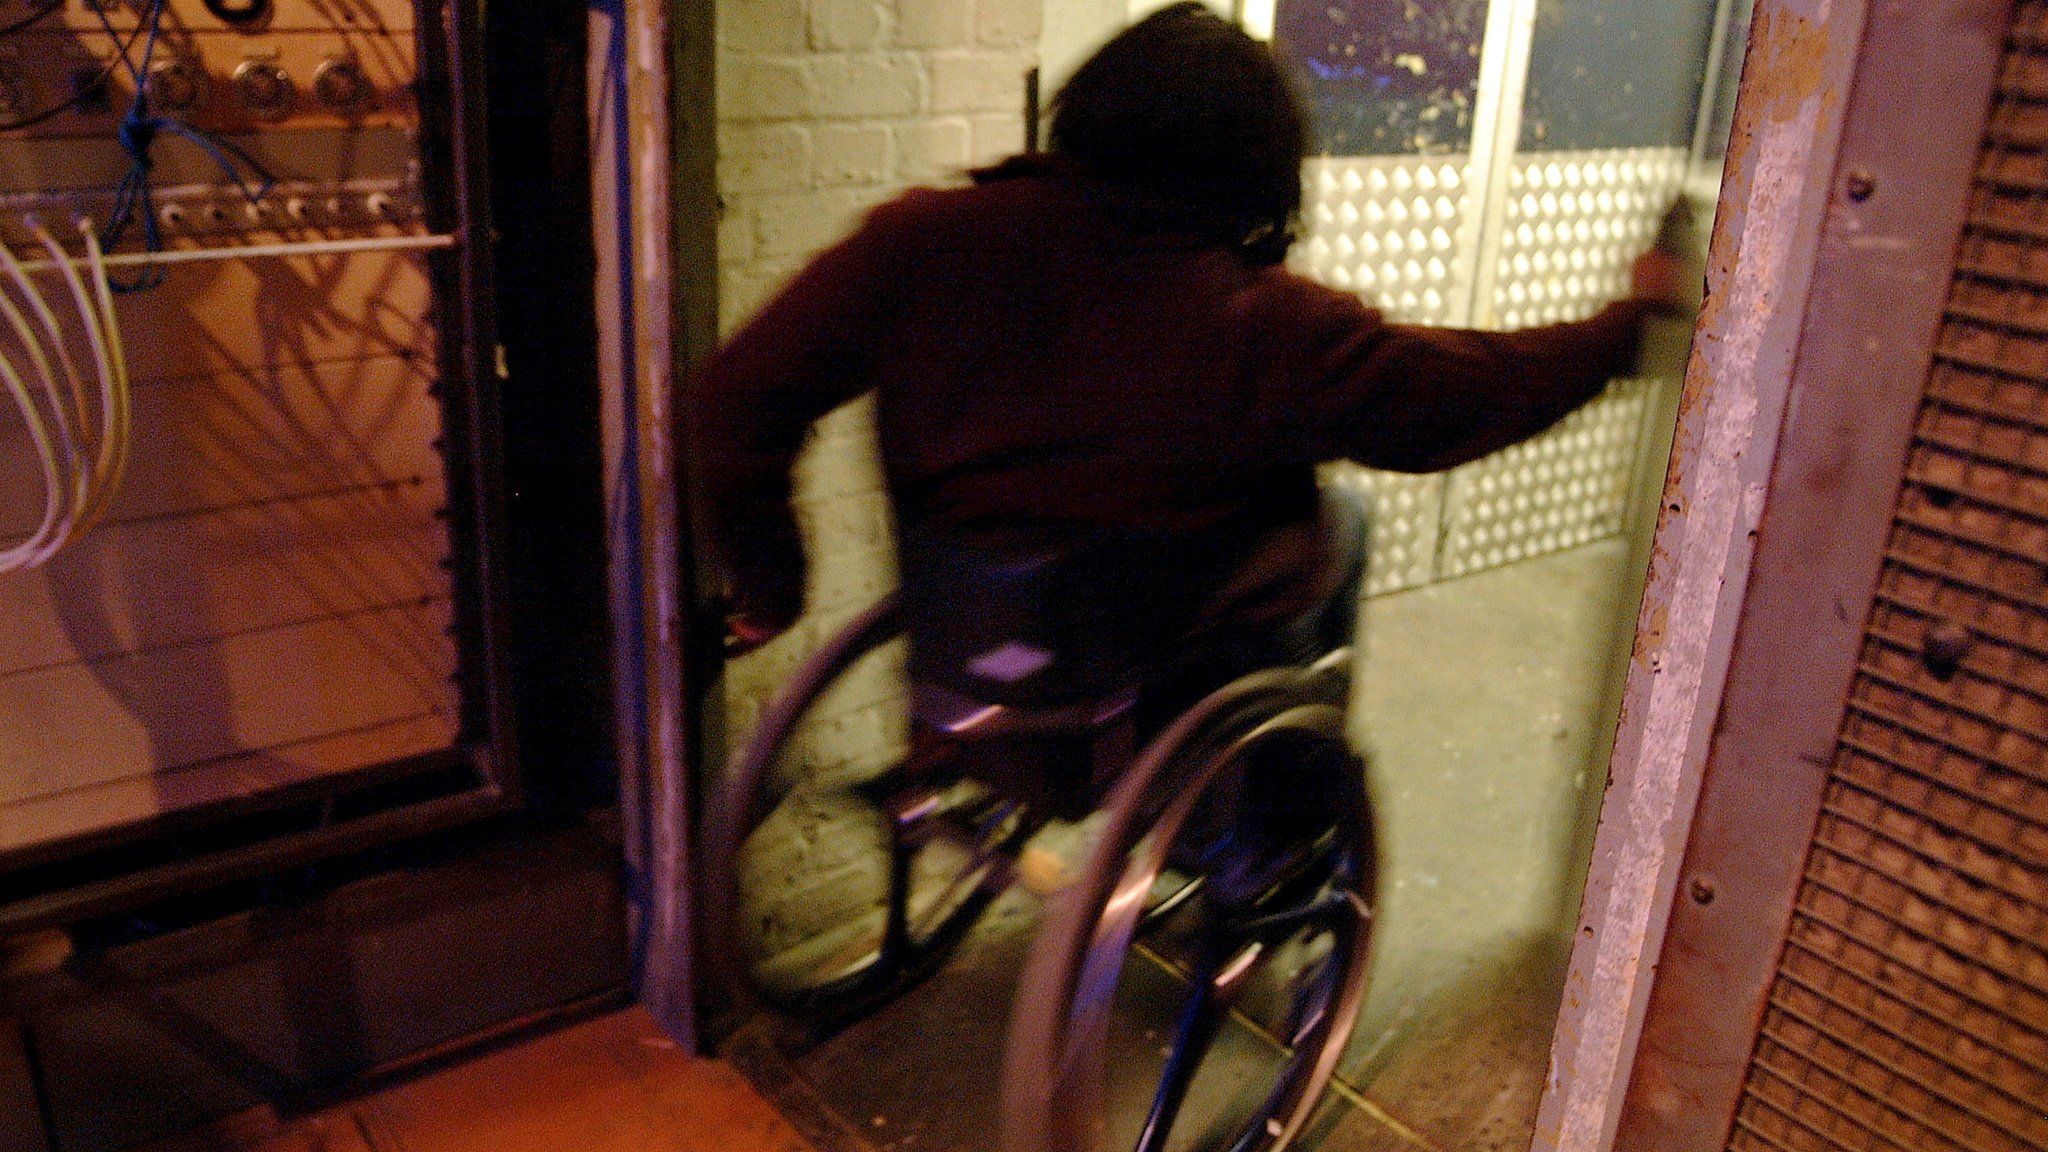 A man in a wheelchair going through a doorway